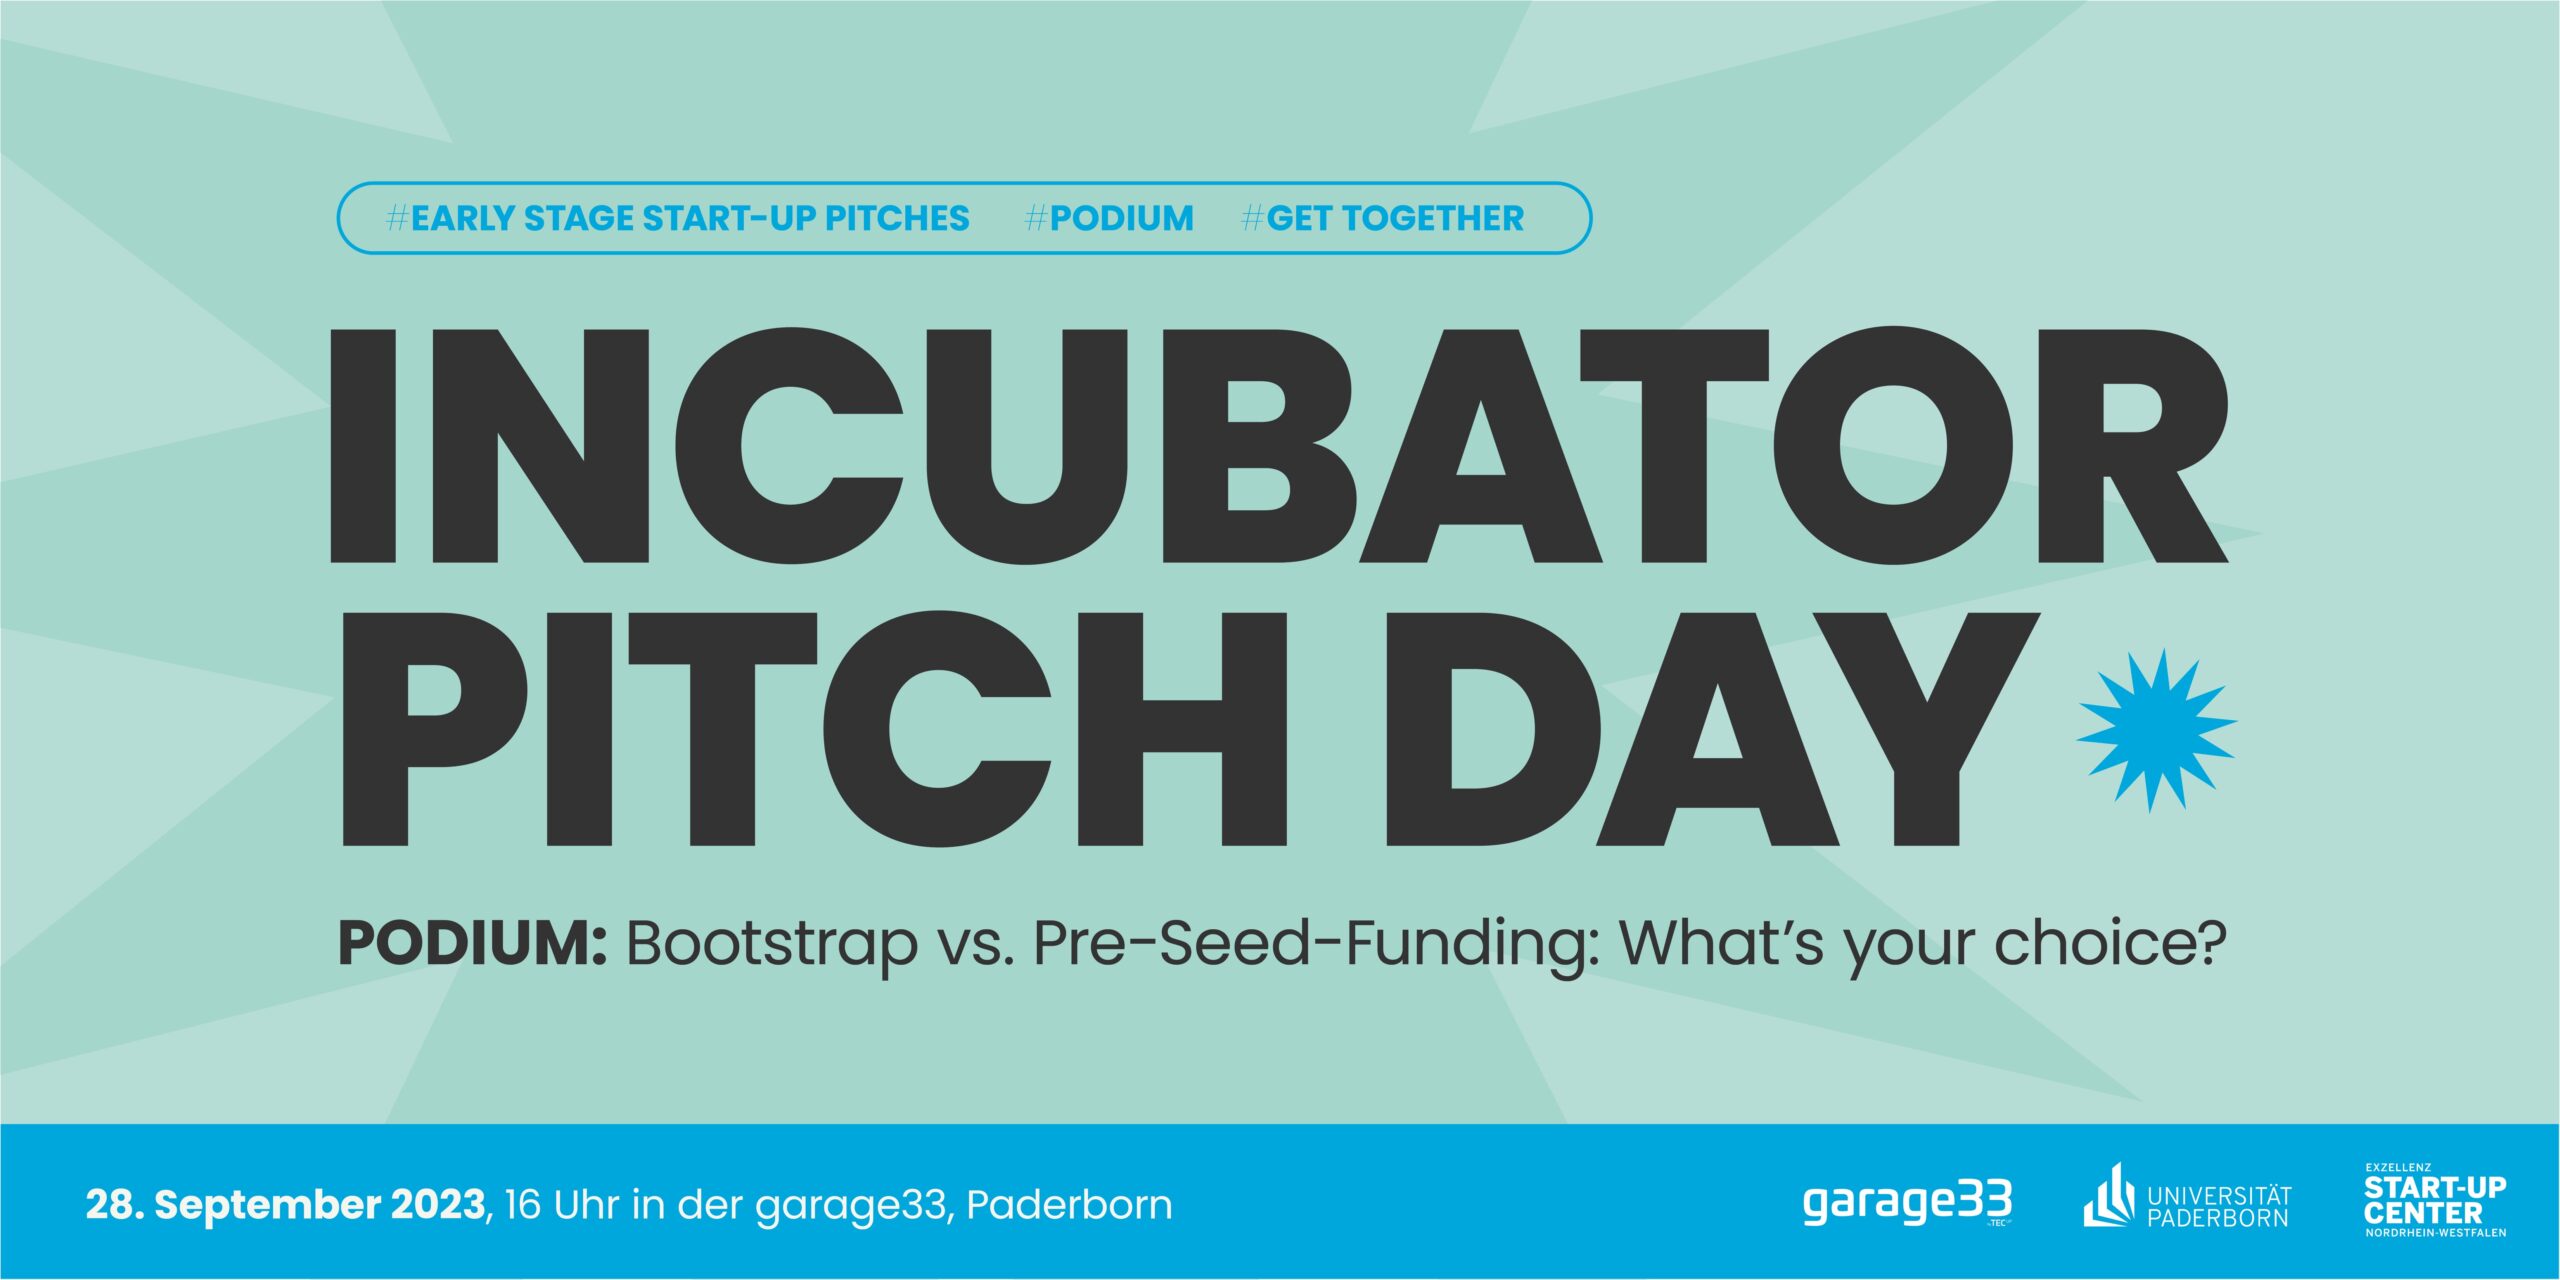 Incubator Pitch Day & Podium @garage33